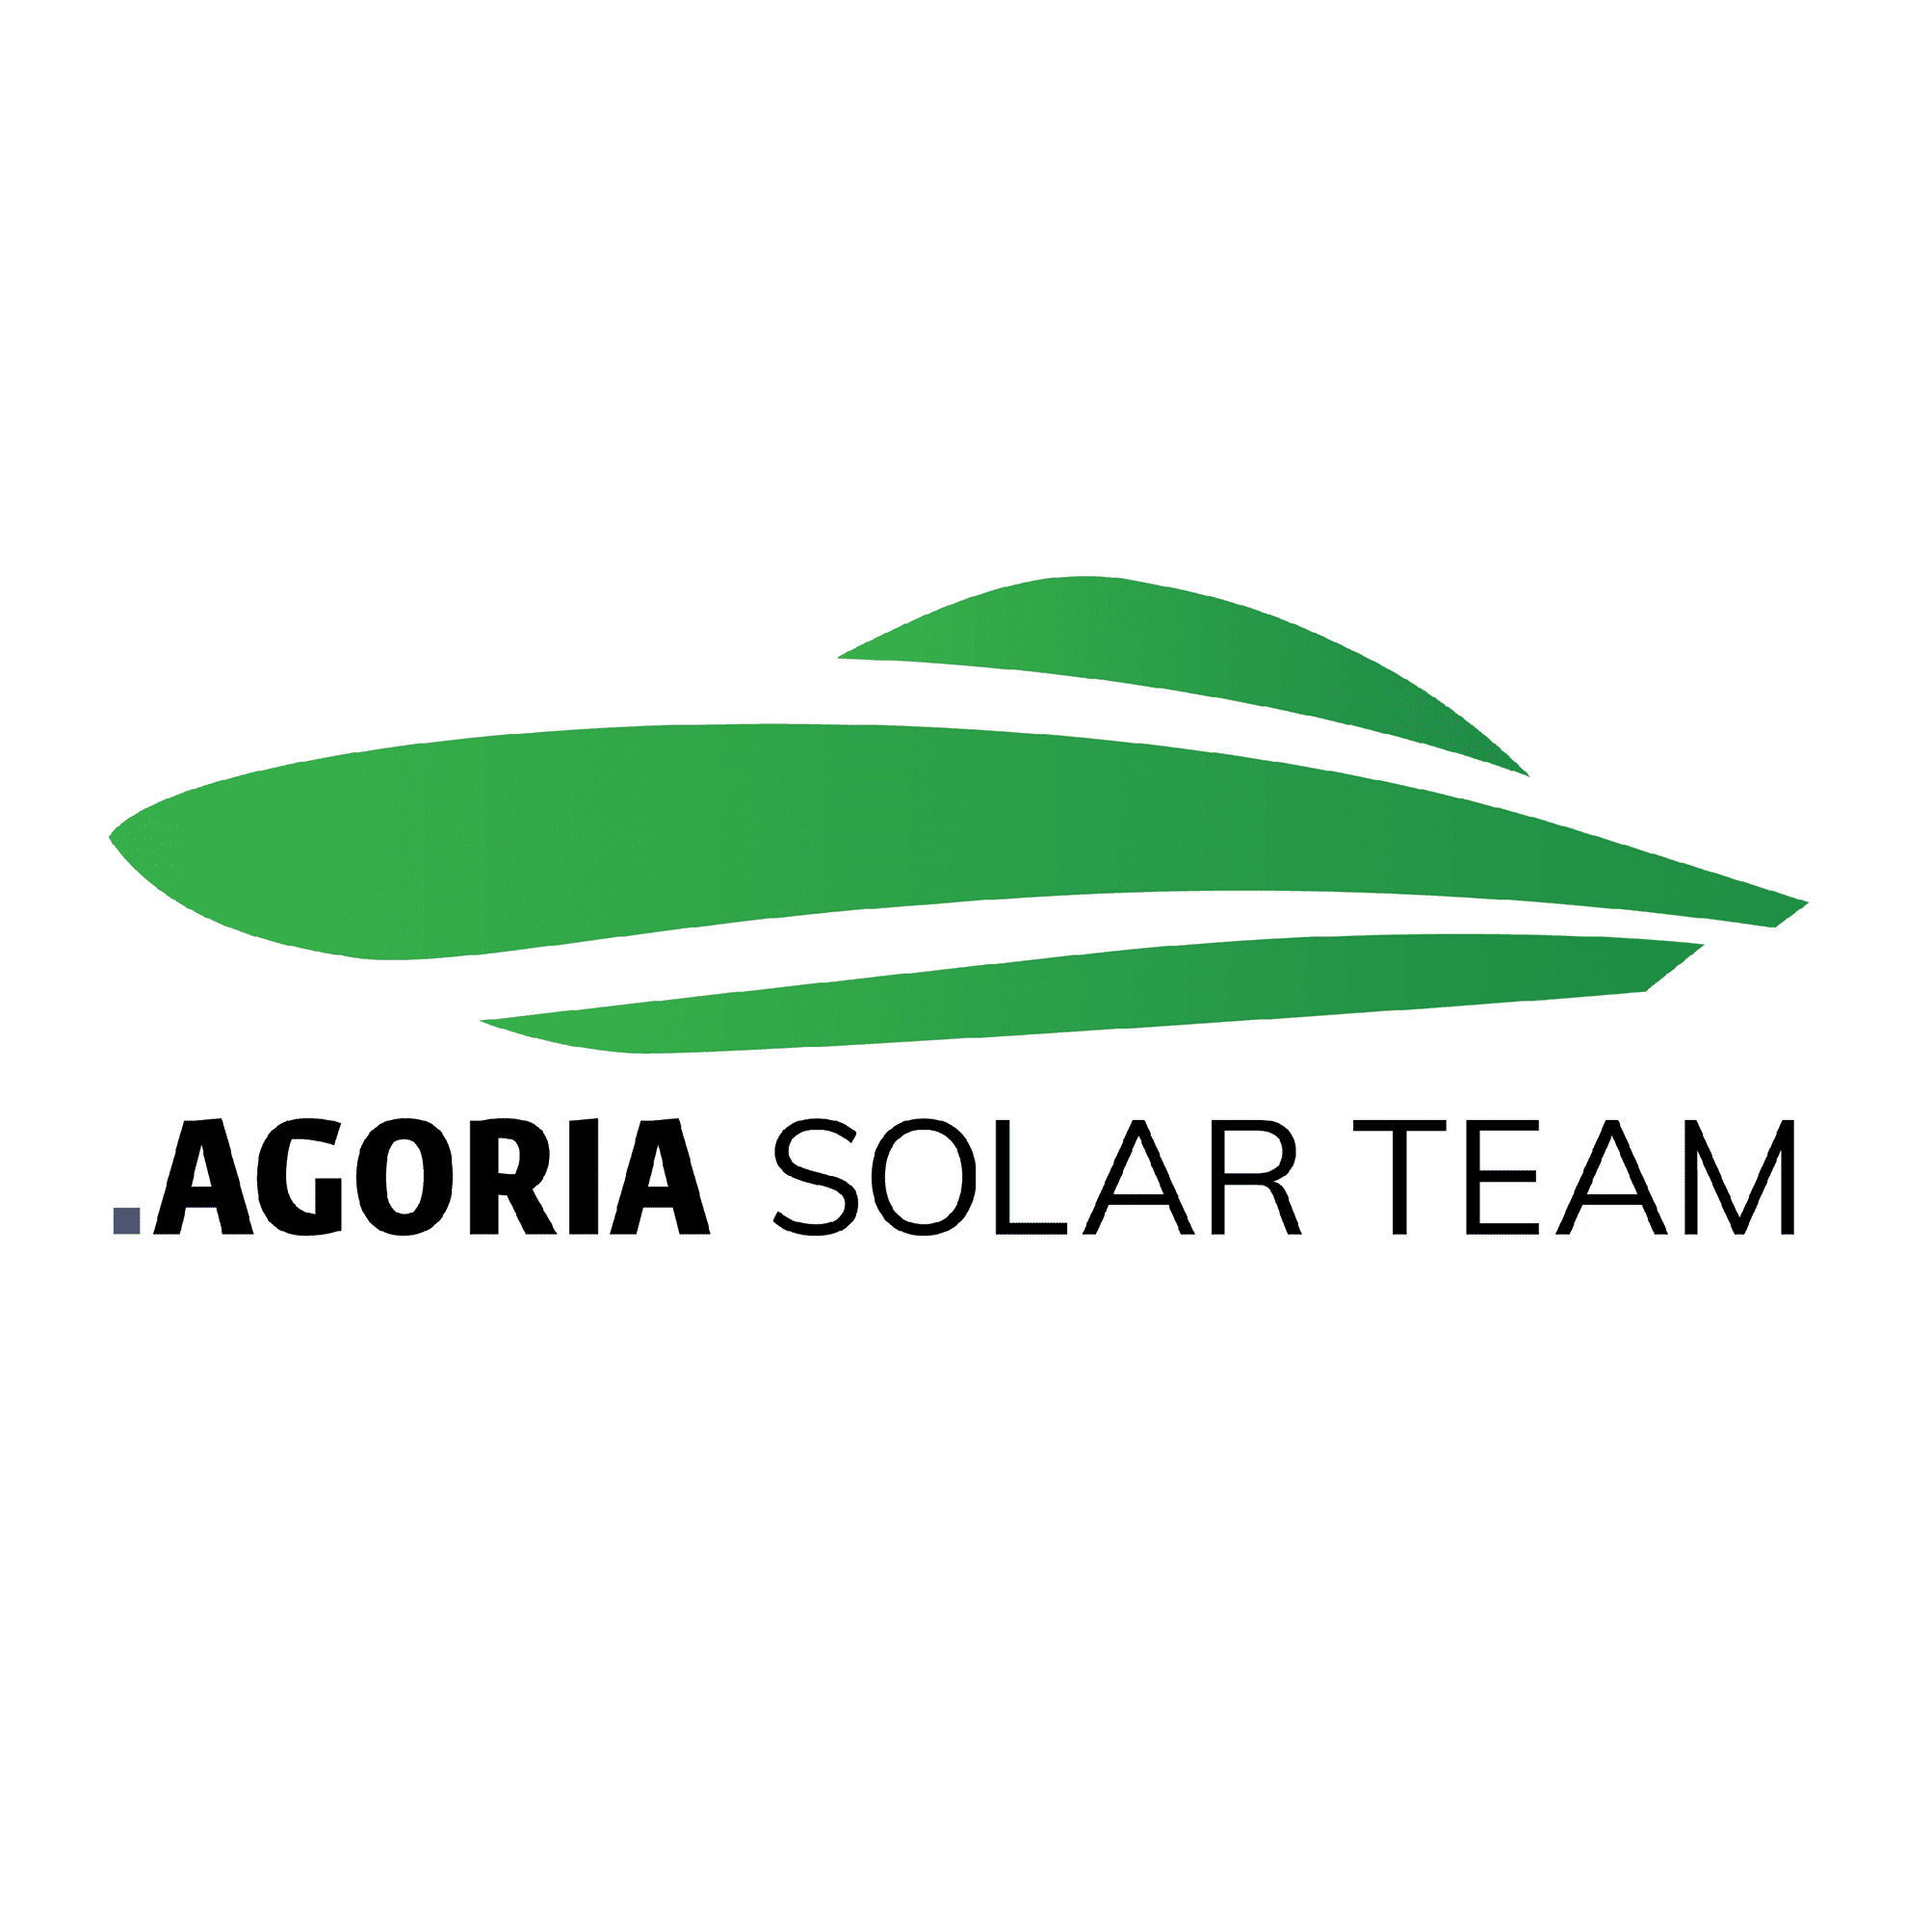 Let's Meet: Agoria Solar Team - 2/05/2022